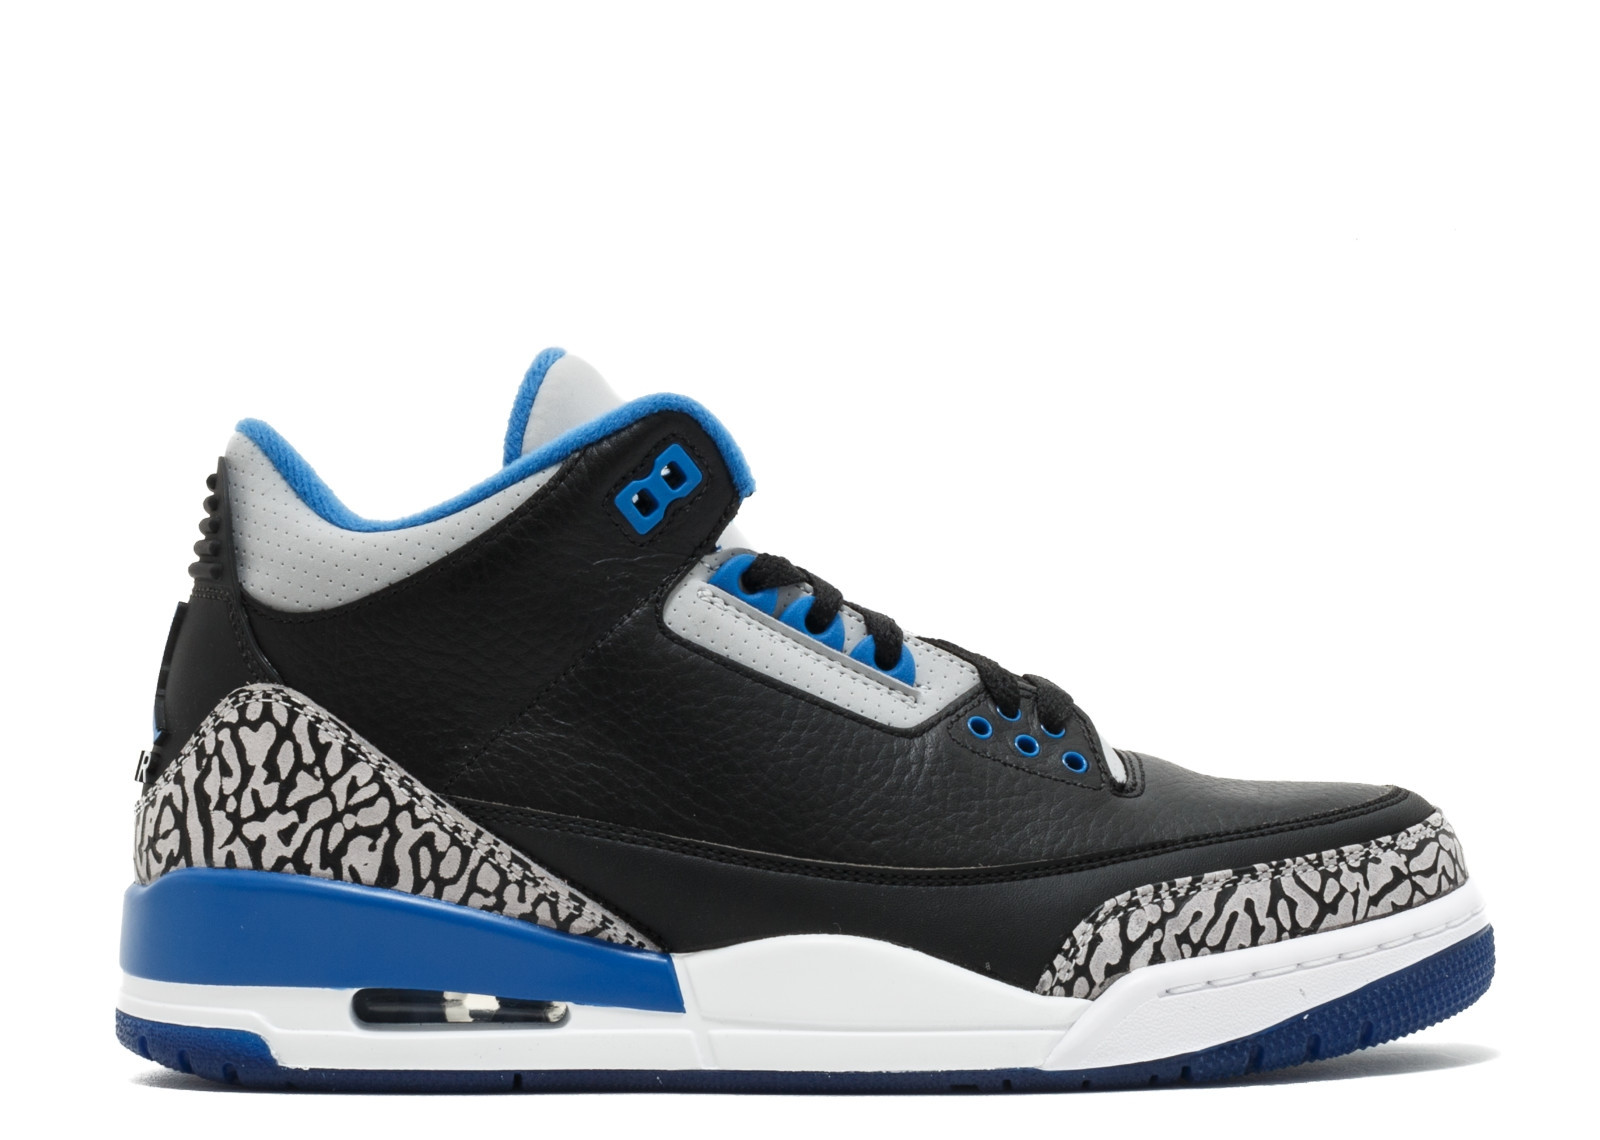 Jordan 3 Retro "Sport Blue"